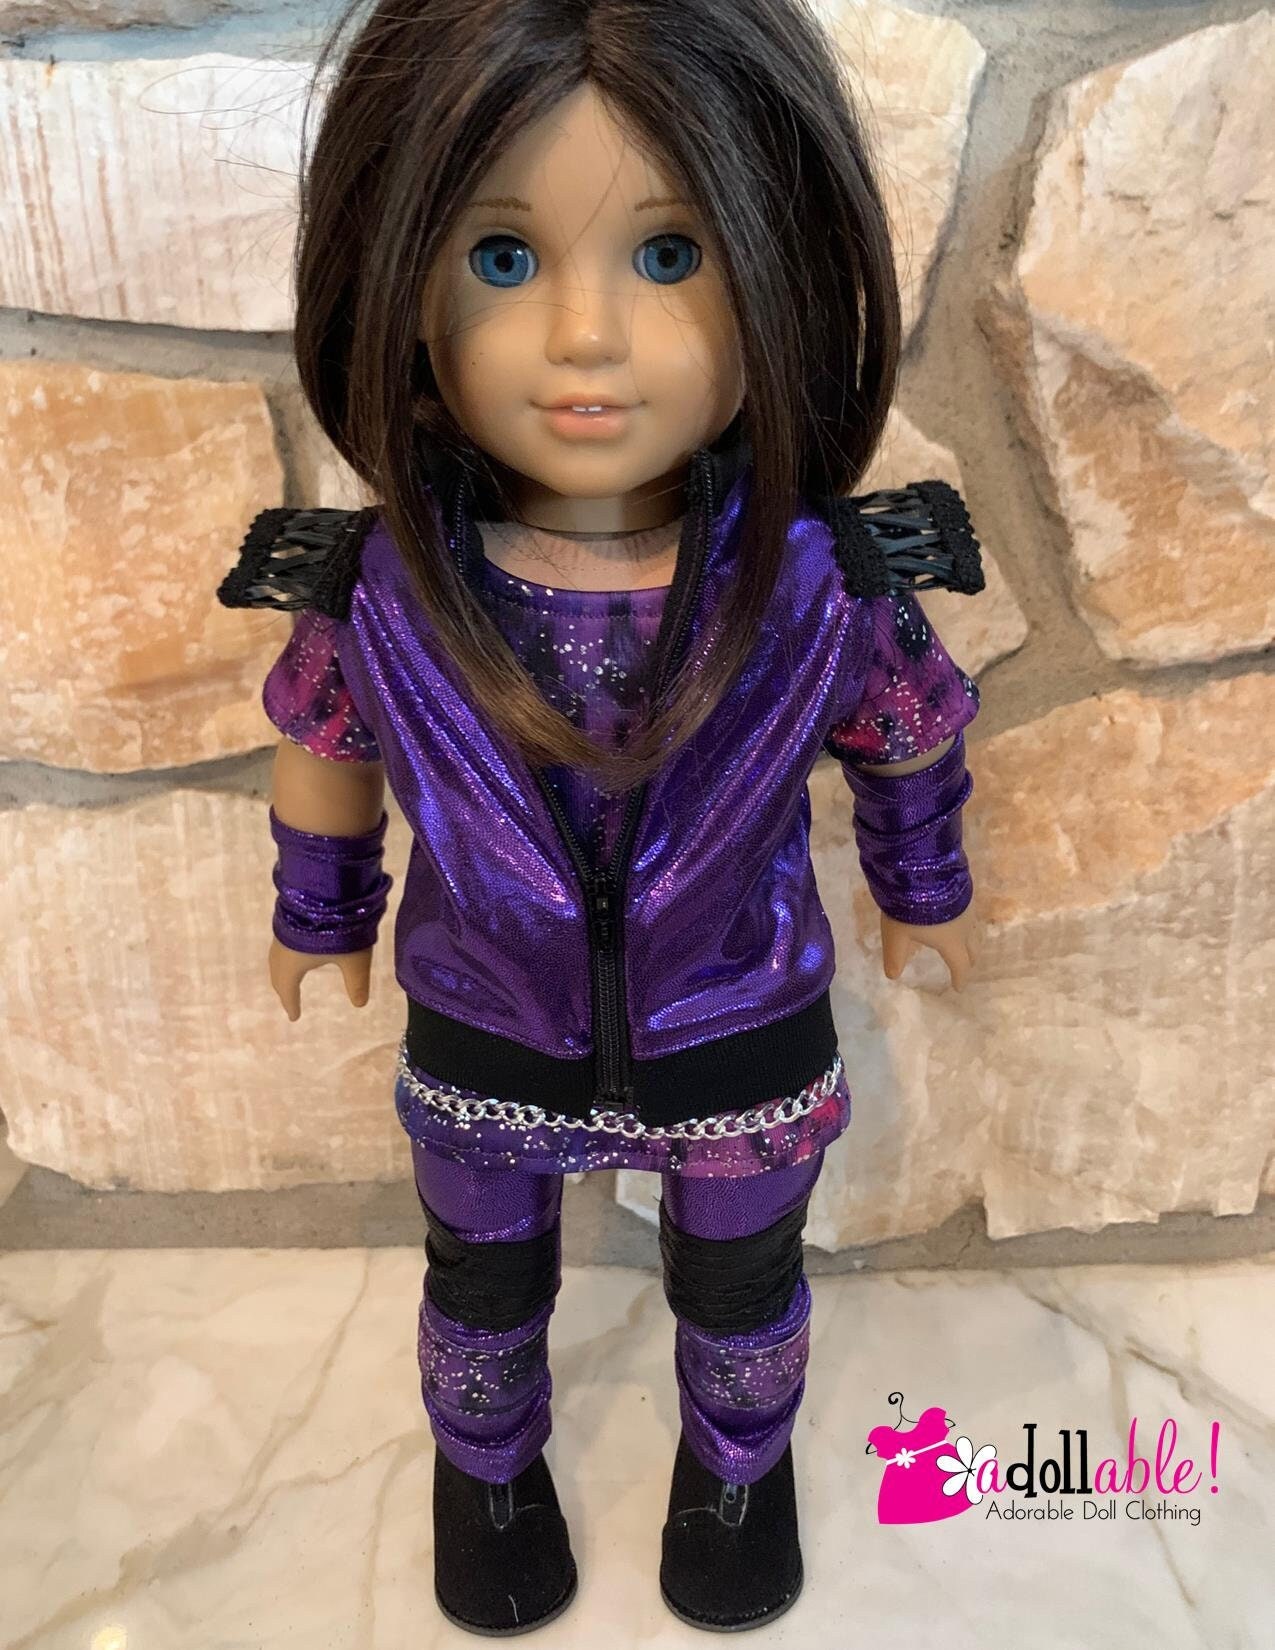 Mal Doll,inspired by Disney's Descendants 3, Fashion Doll for Girls